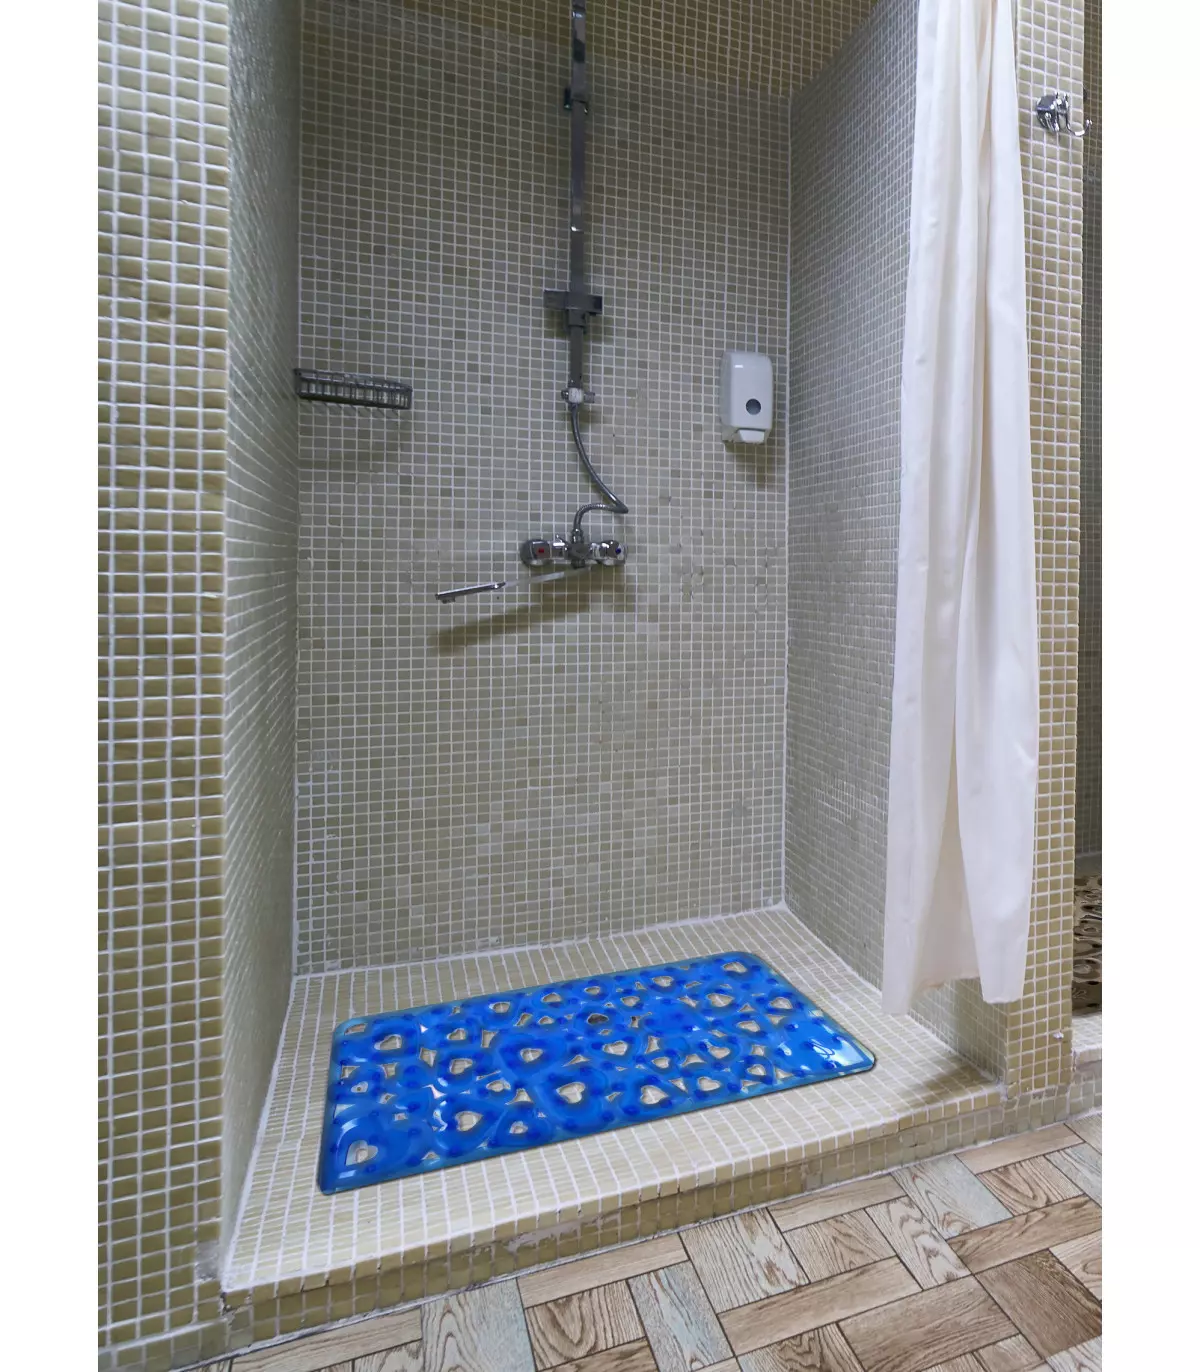 Rectangular rubber tub shower mat with blue heart suckers